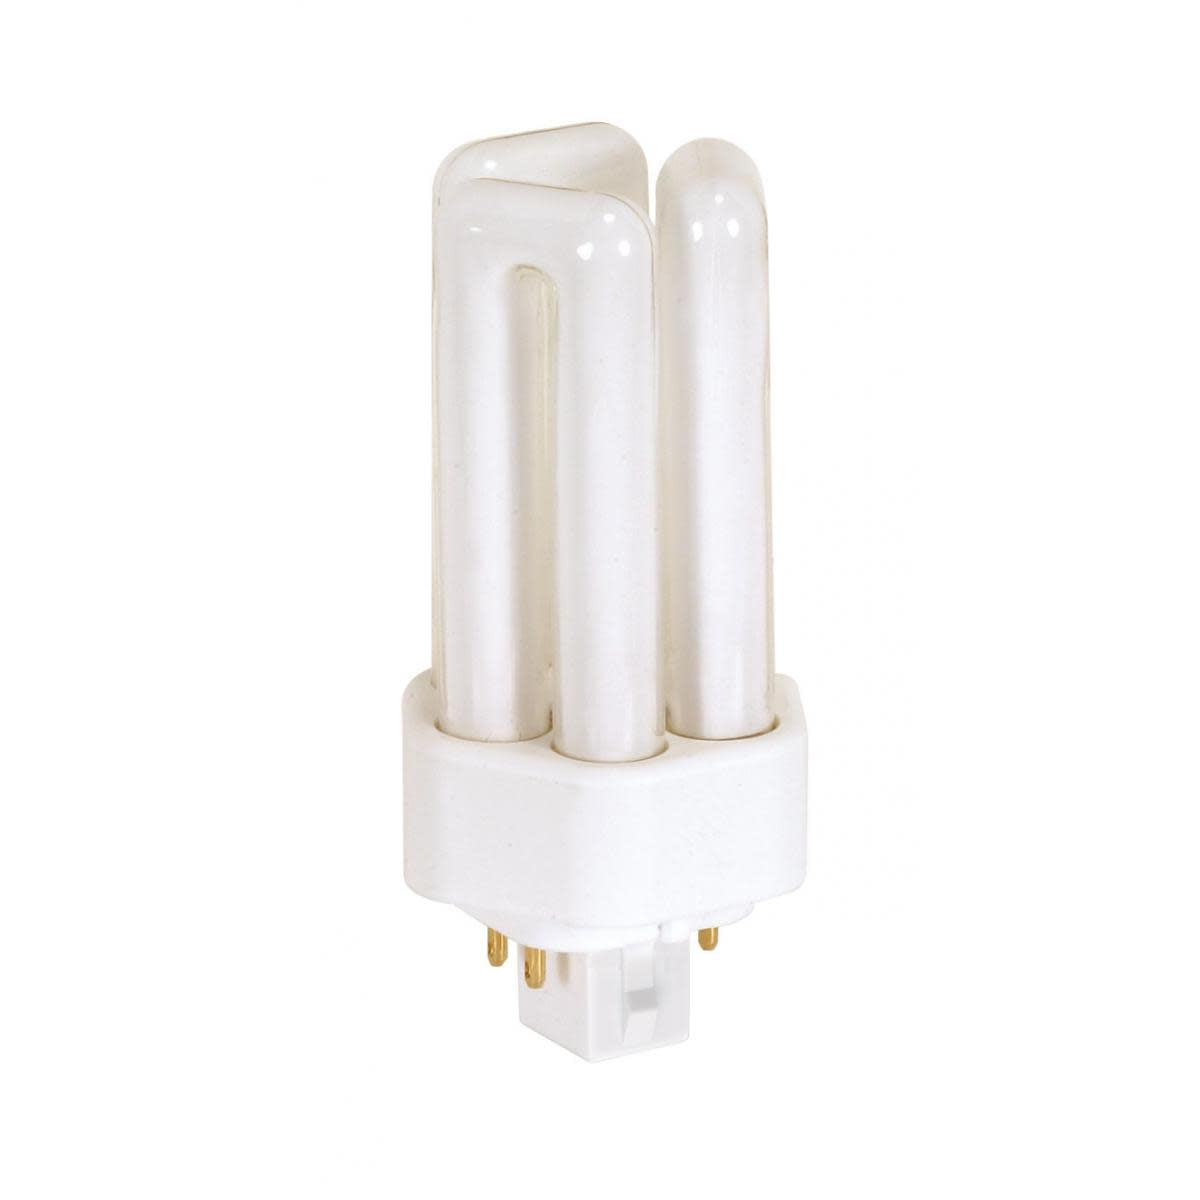 GE 97616 26 W Triple Tube Compact Fluorescent Light Bulb 